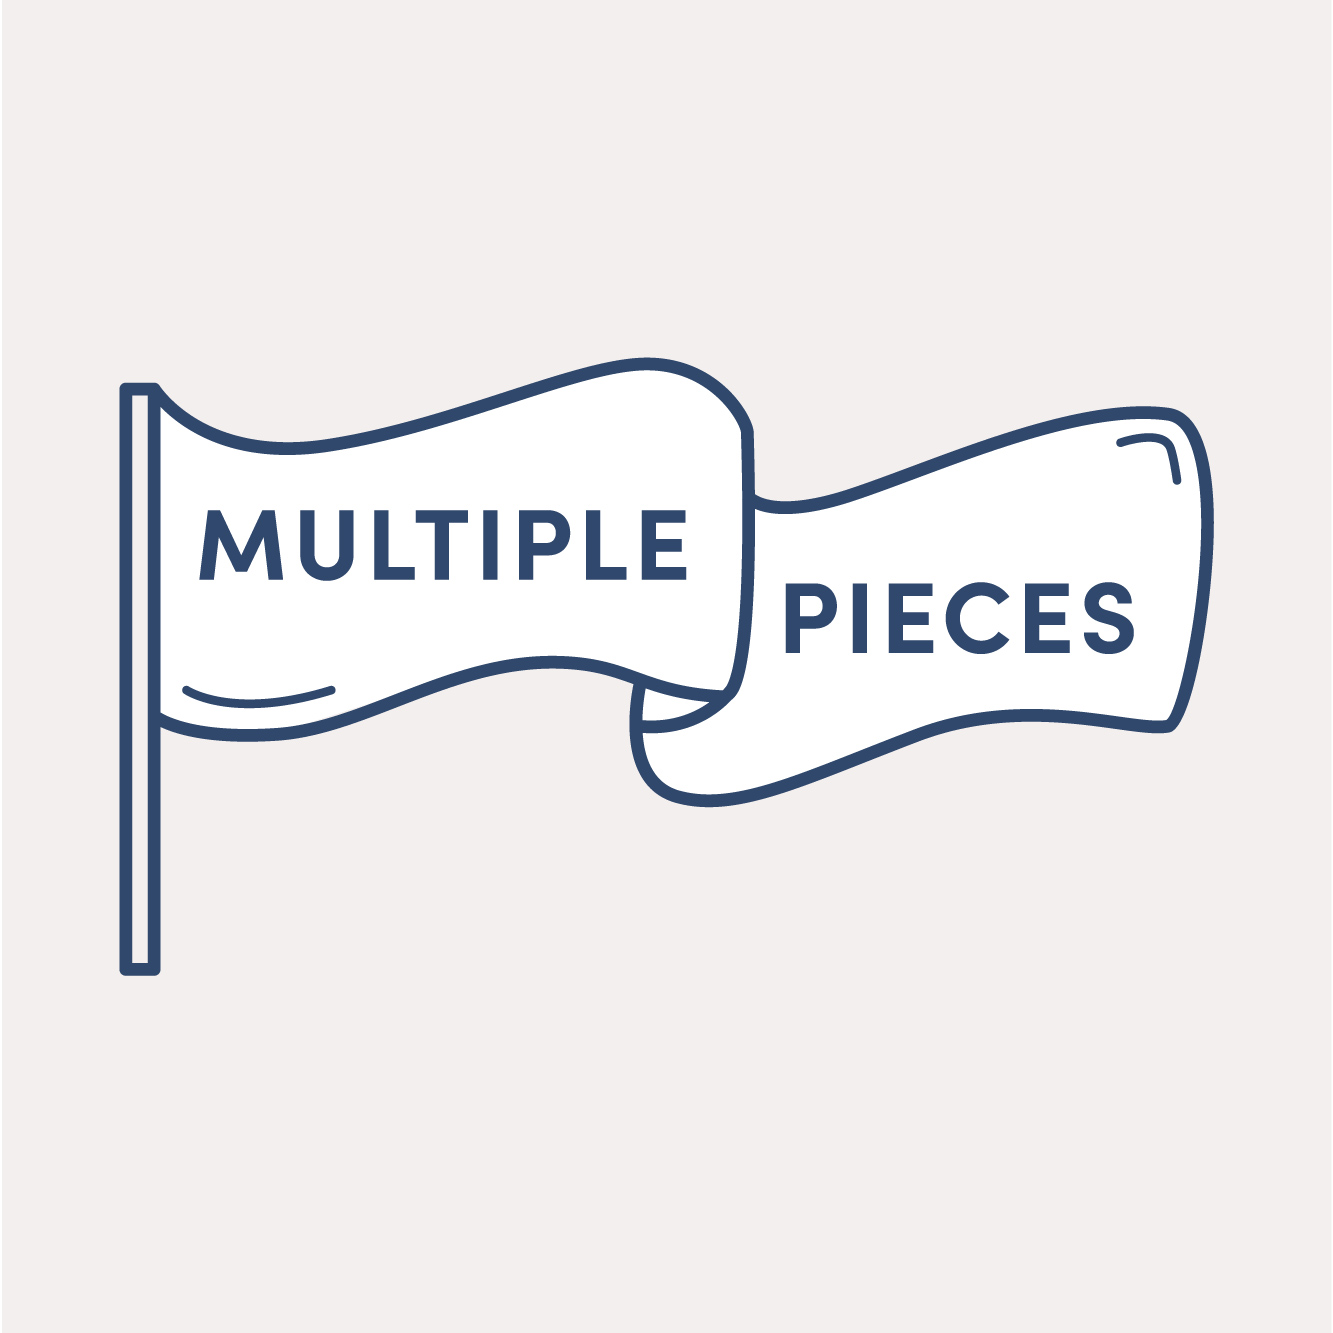 Features_Badges_Multiple Pieces